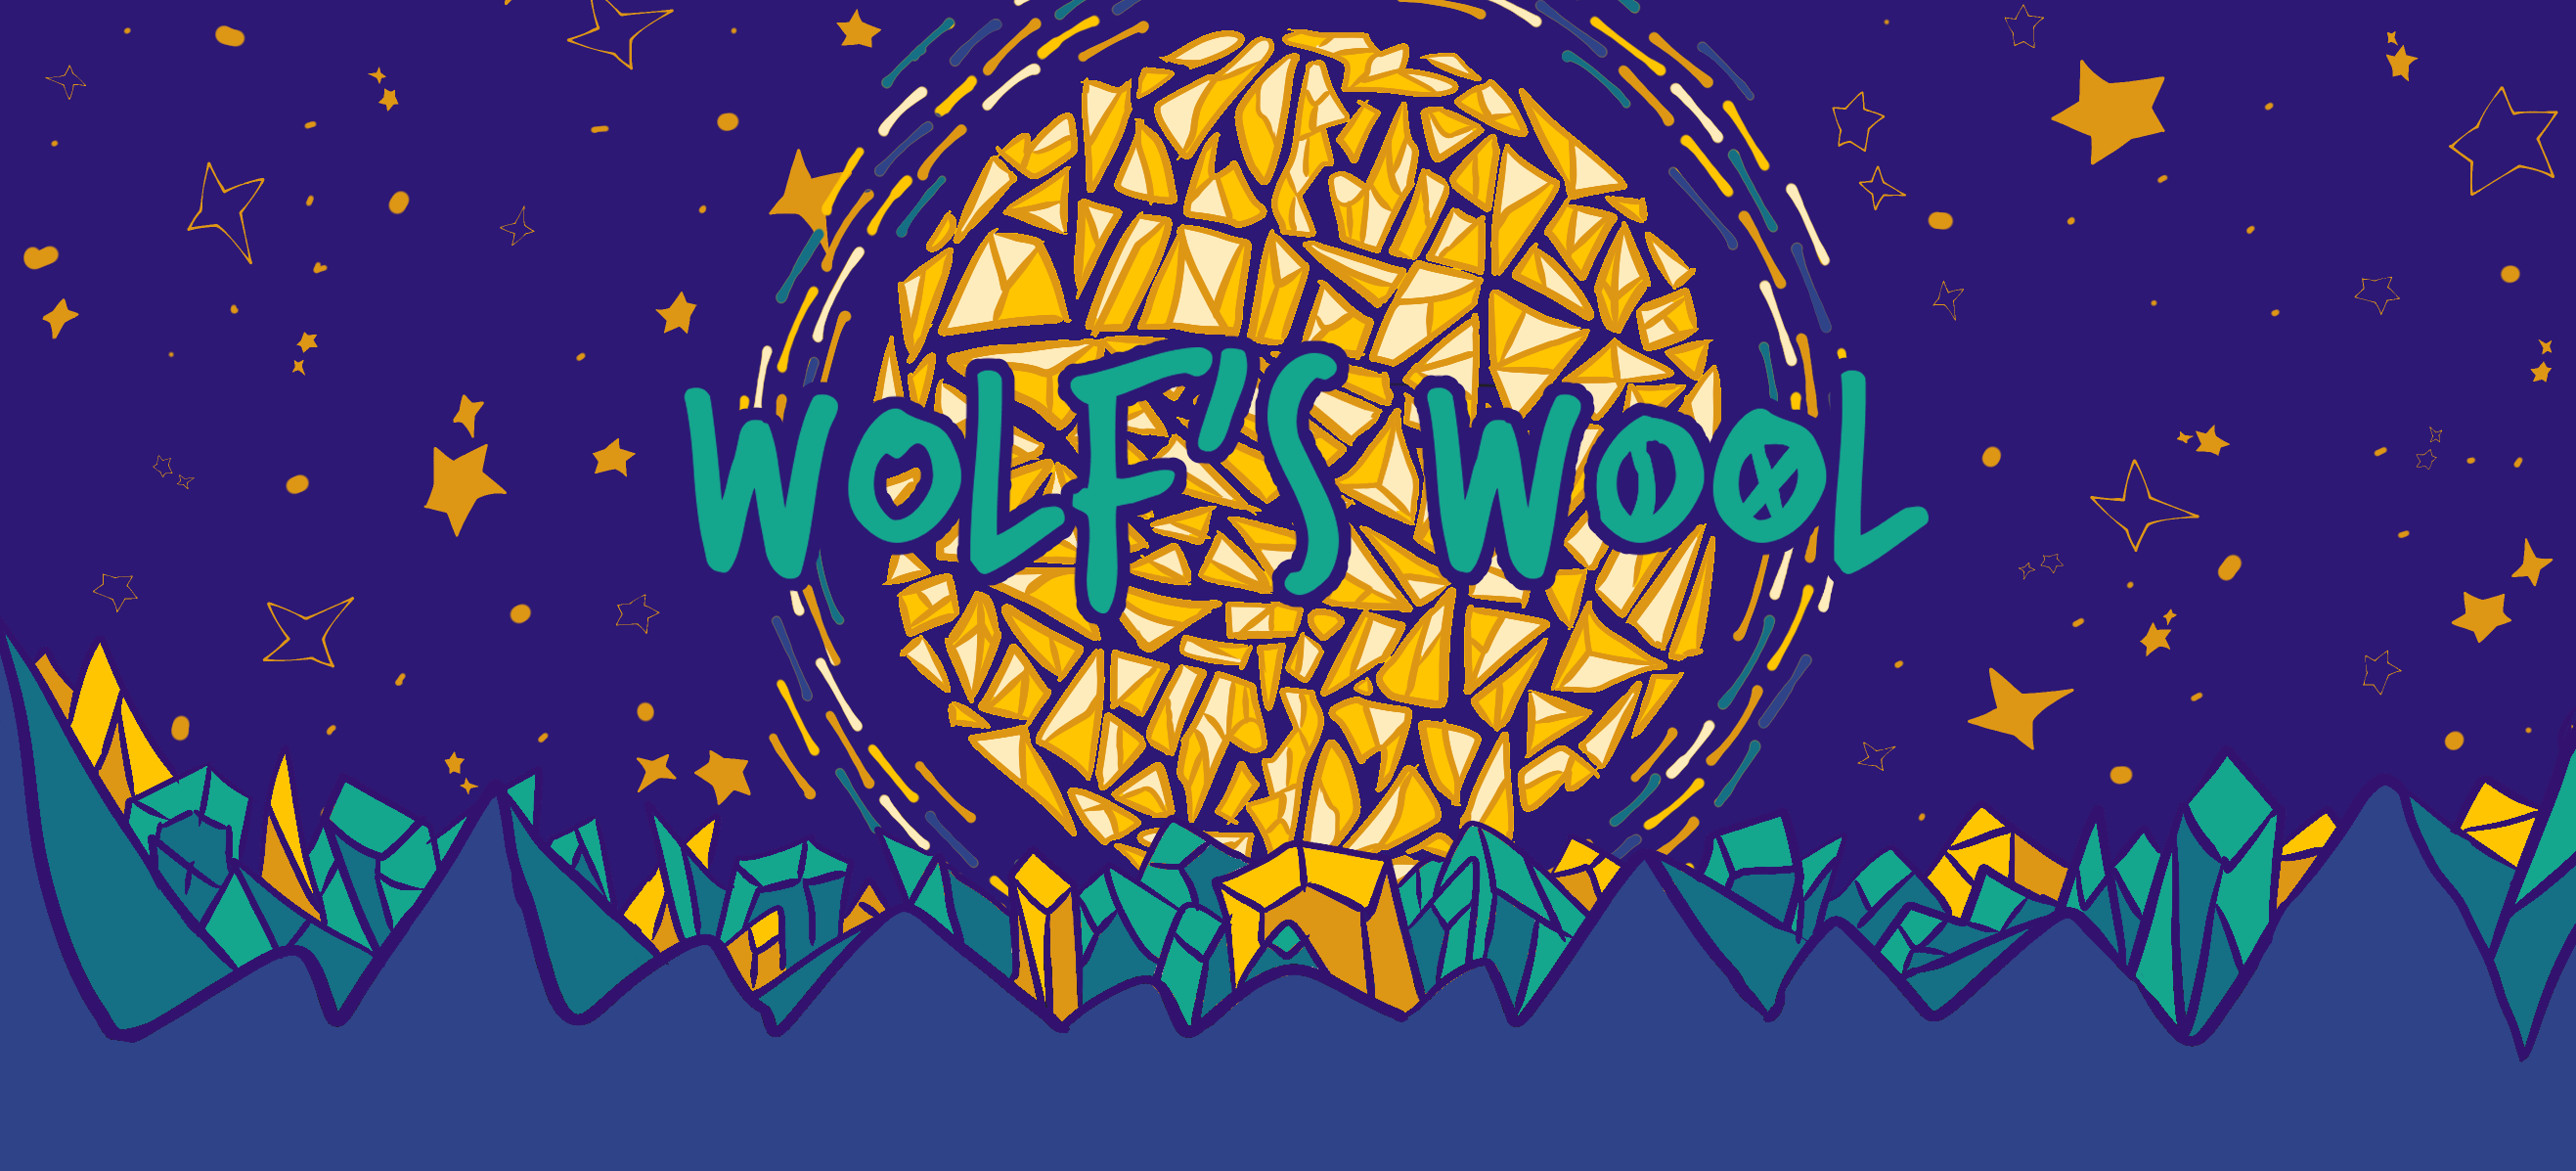 Wolf's Wool